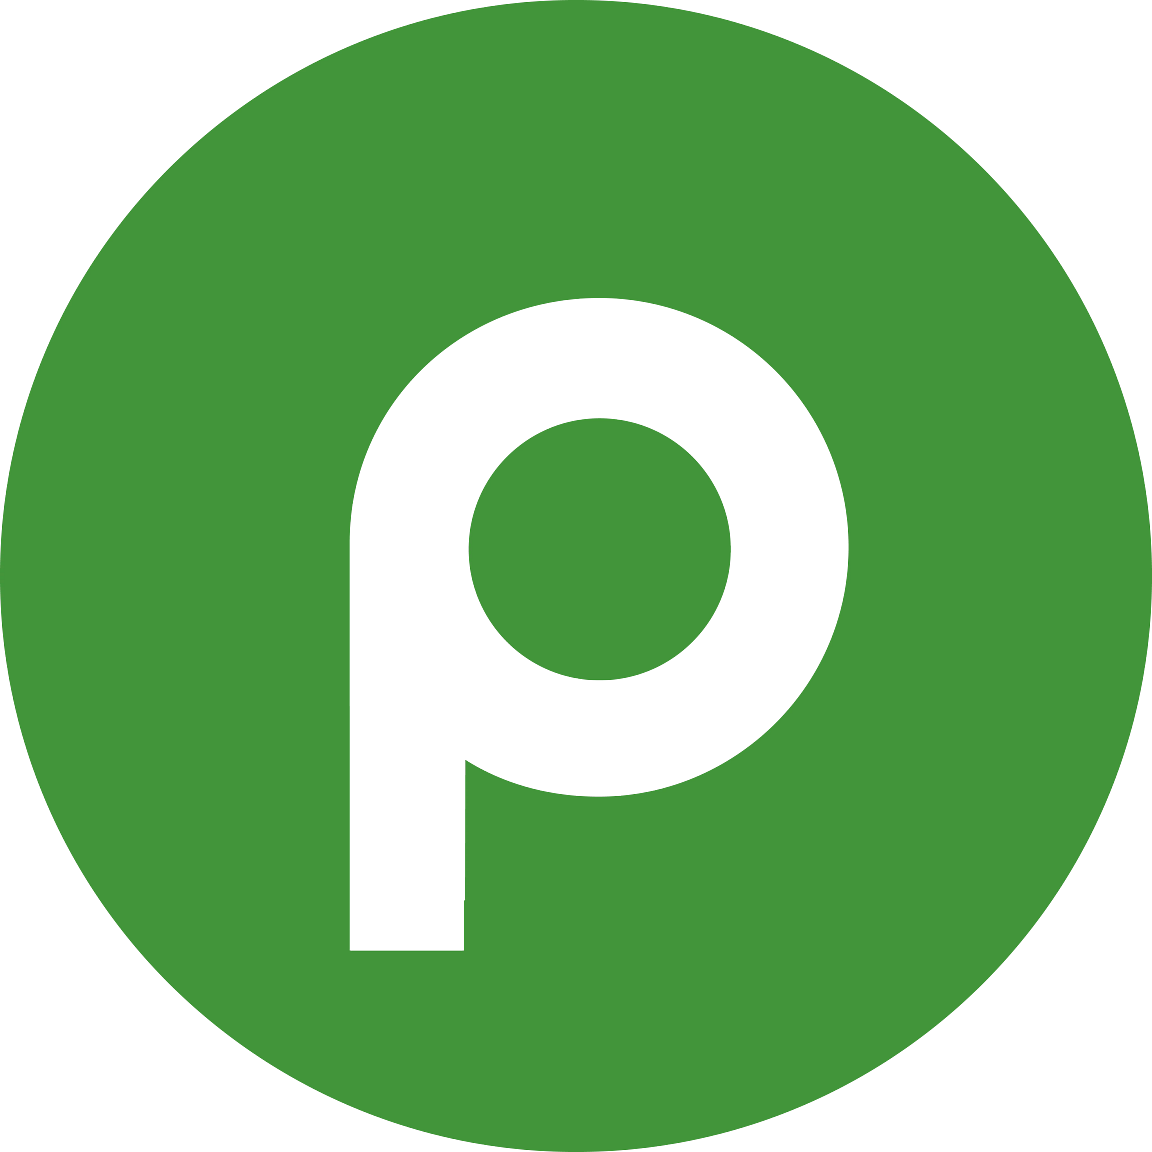 Publix Super Markets brand logo in green color